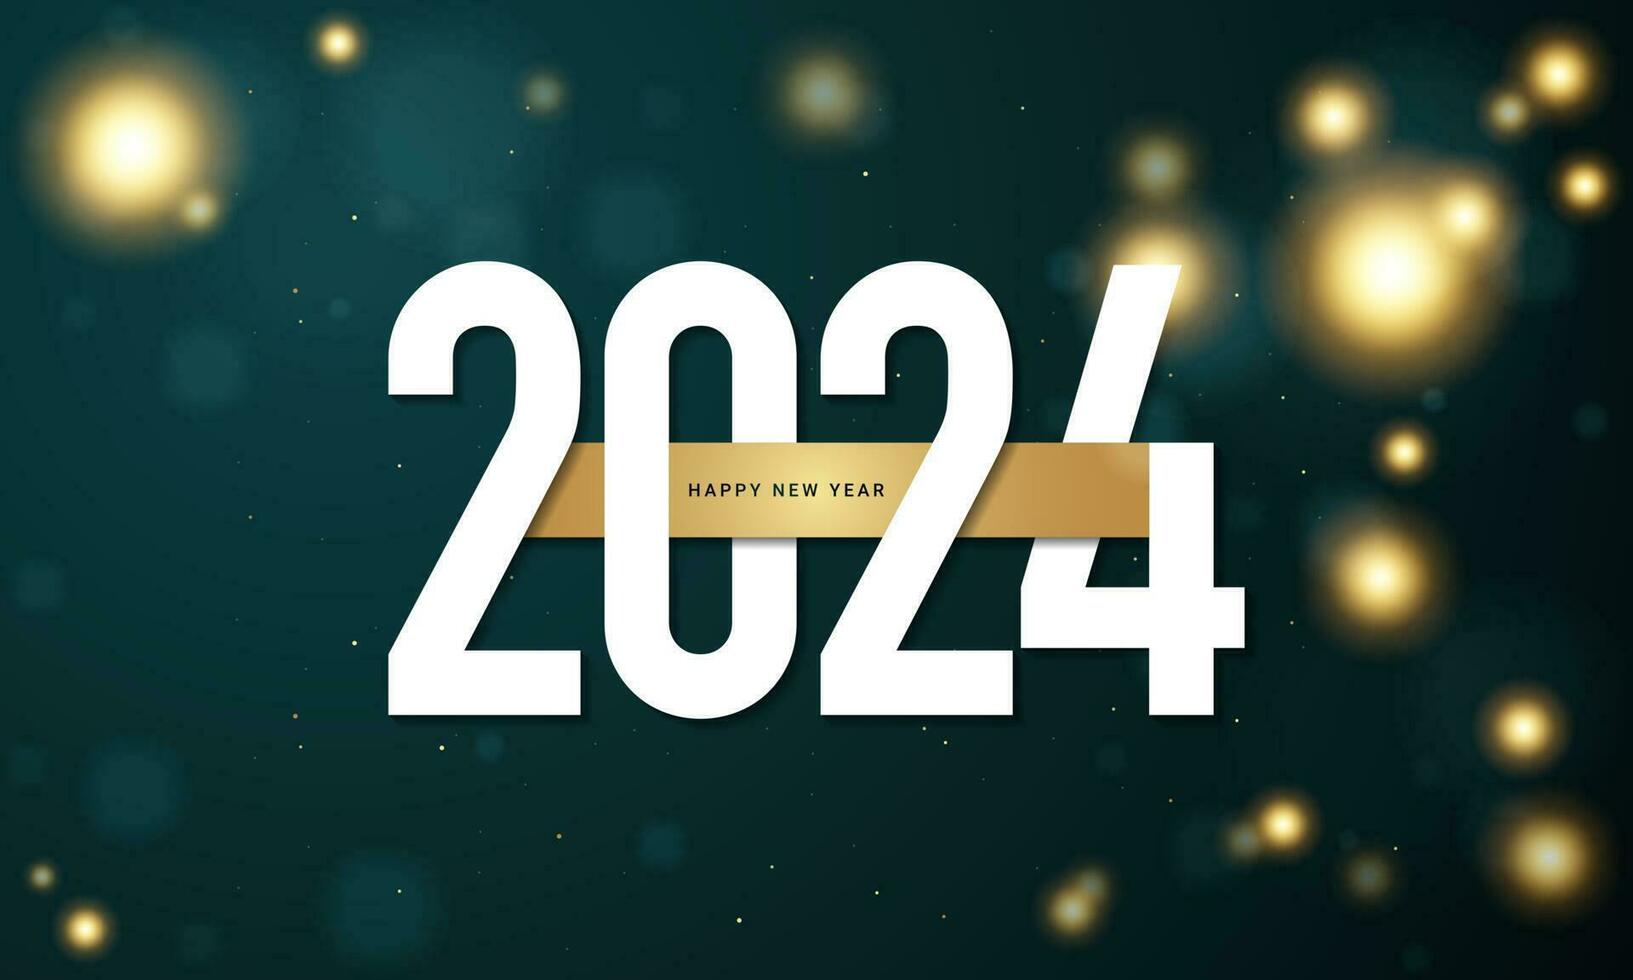 2024 feliz ano novo design de plano de fundo. vetor